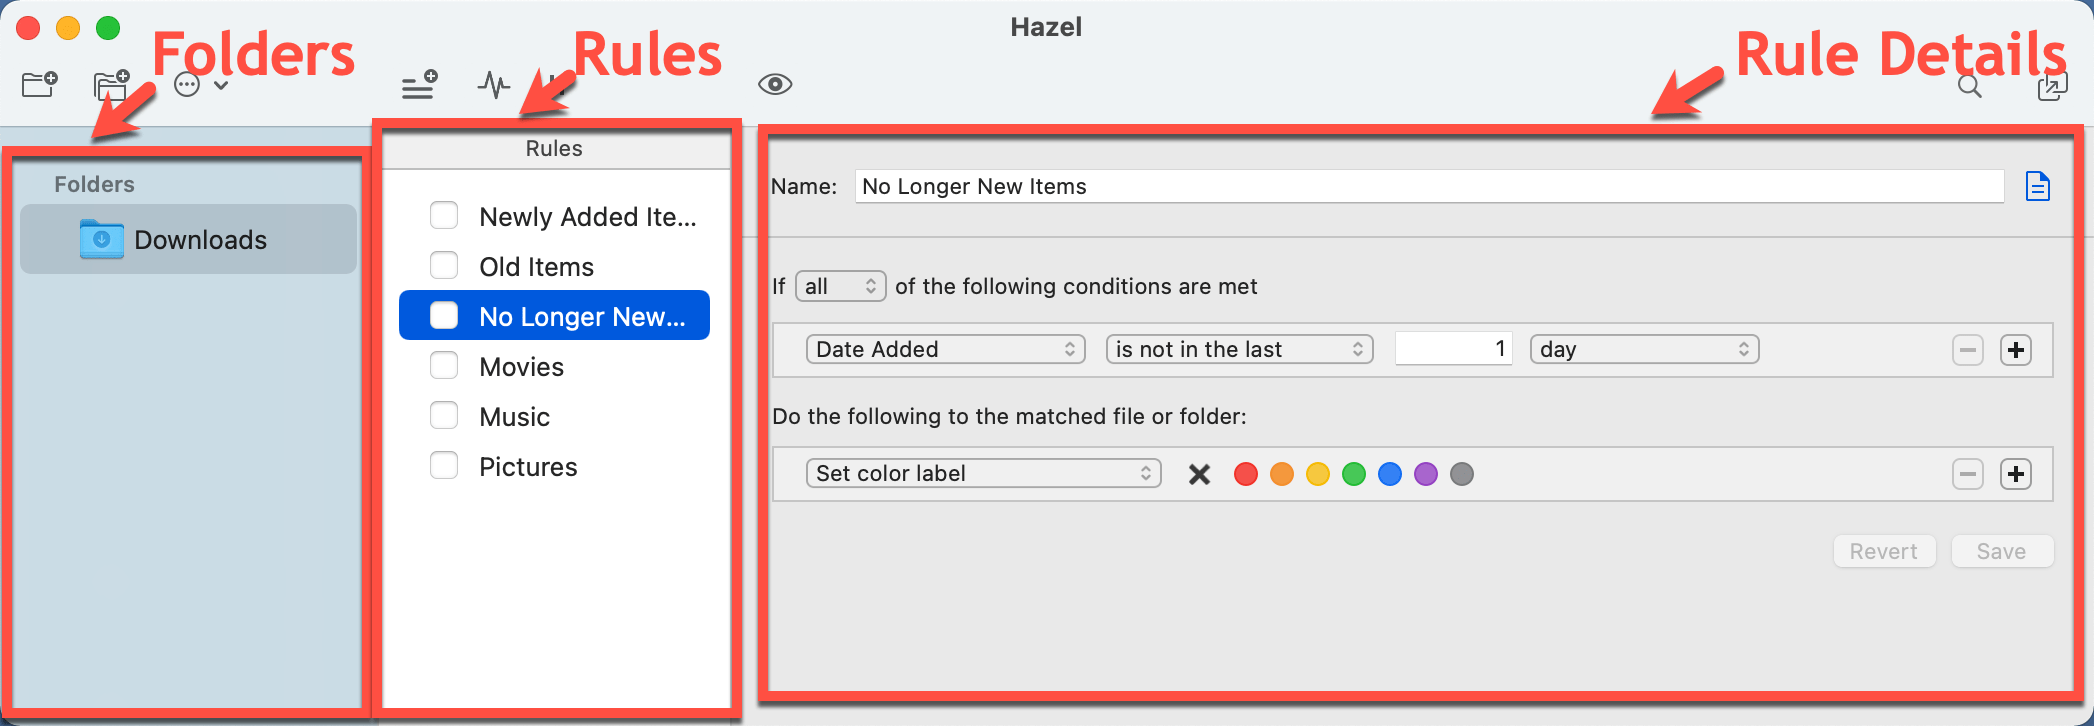 Hazel Interface